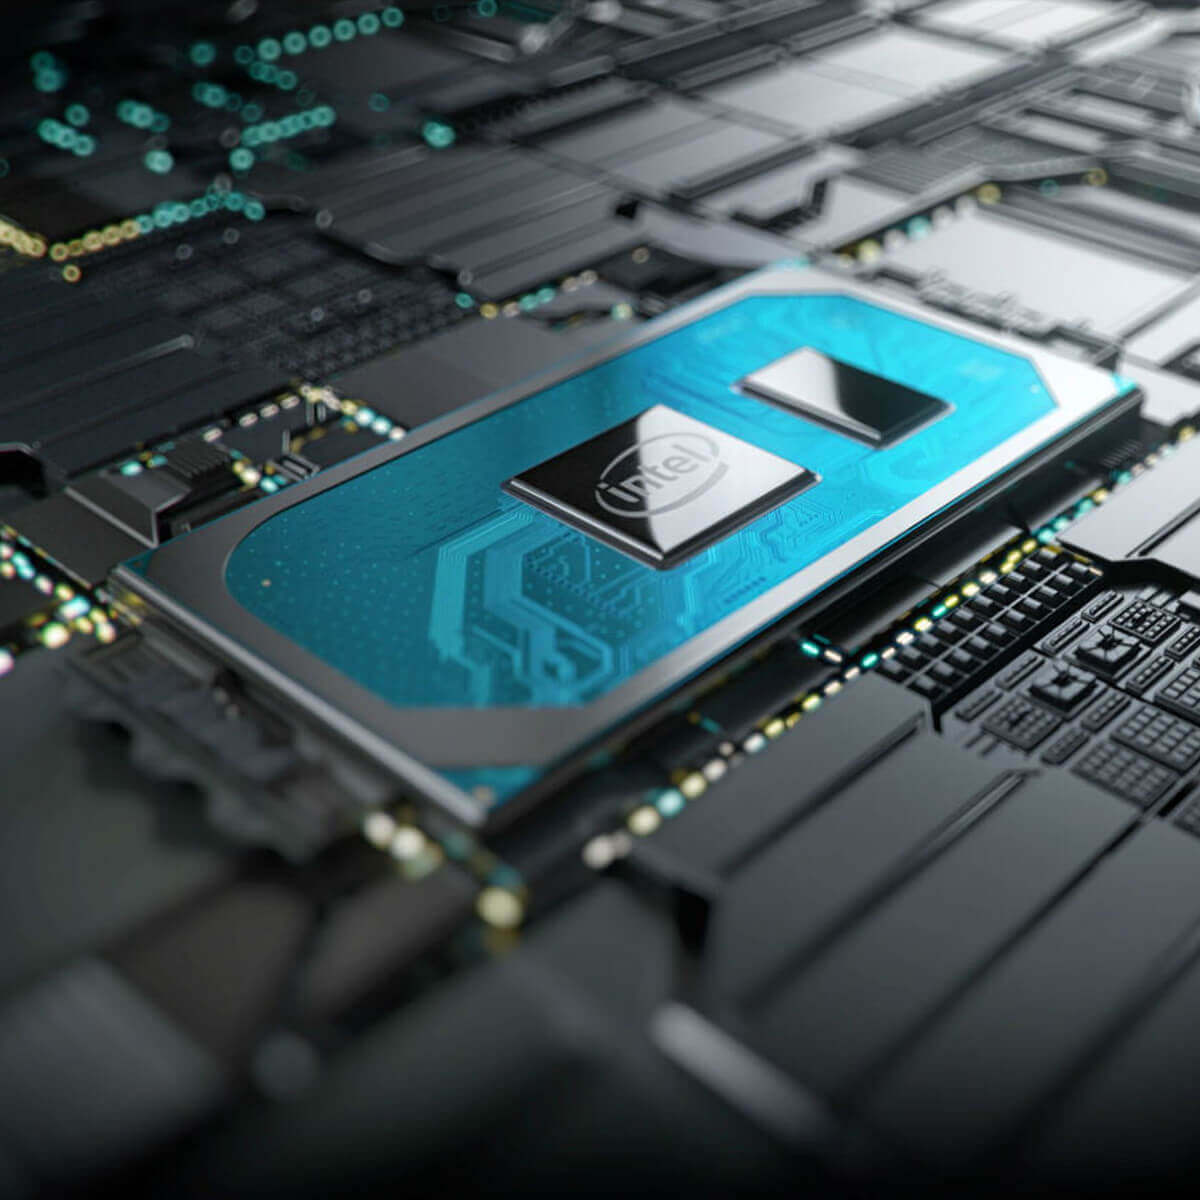 Intel's 10th Gen CPU's boost performance on Windows 10